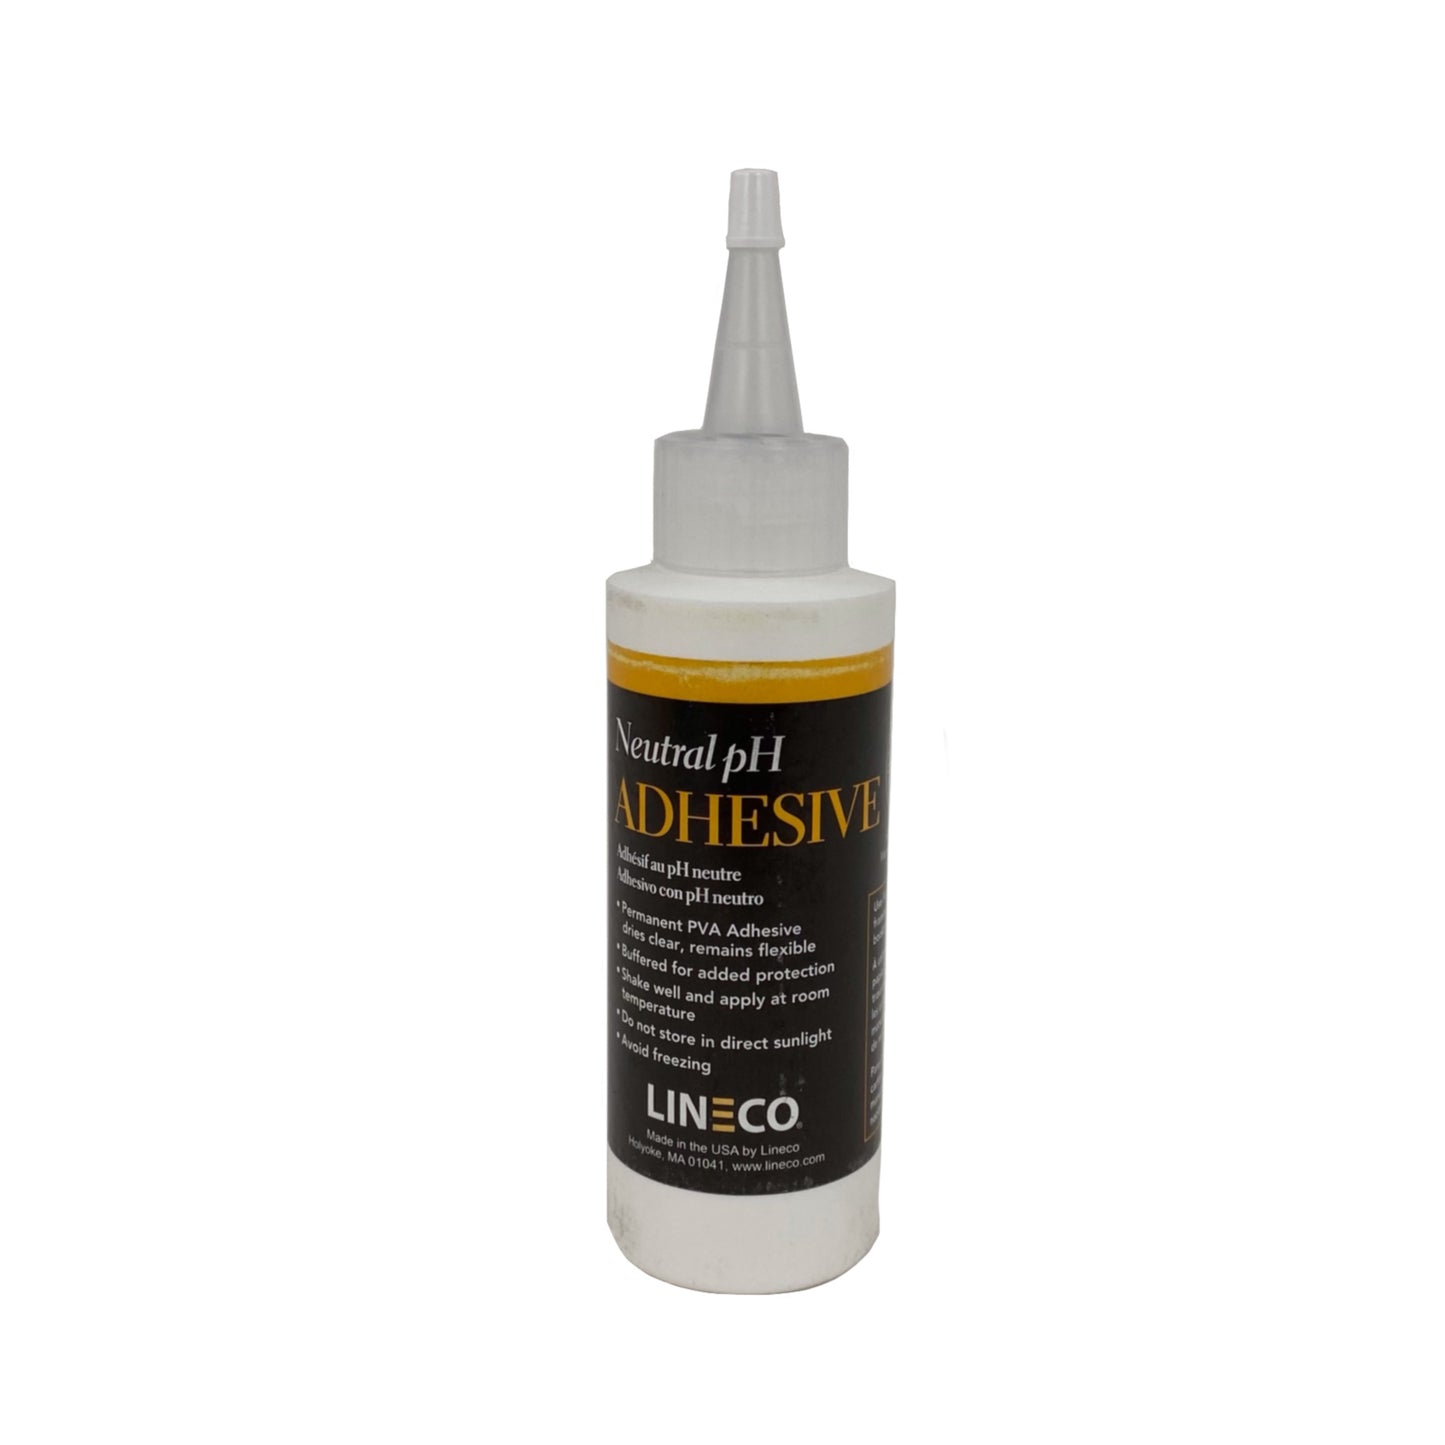 Lineco/Arcare : White Neutral PH Pva Adhesive - 1 Gallon Jar